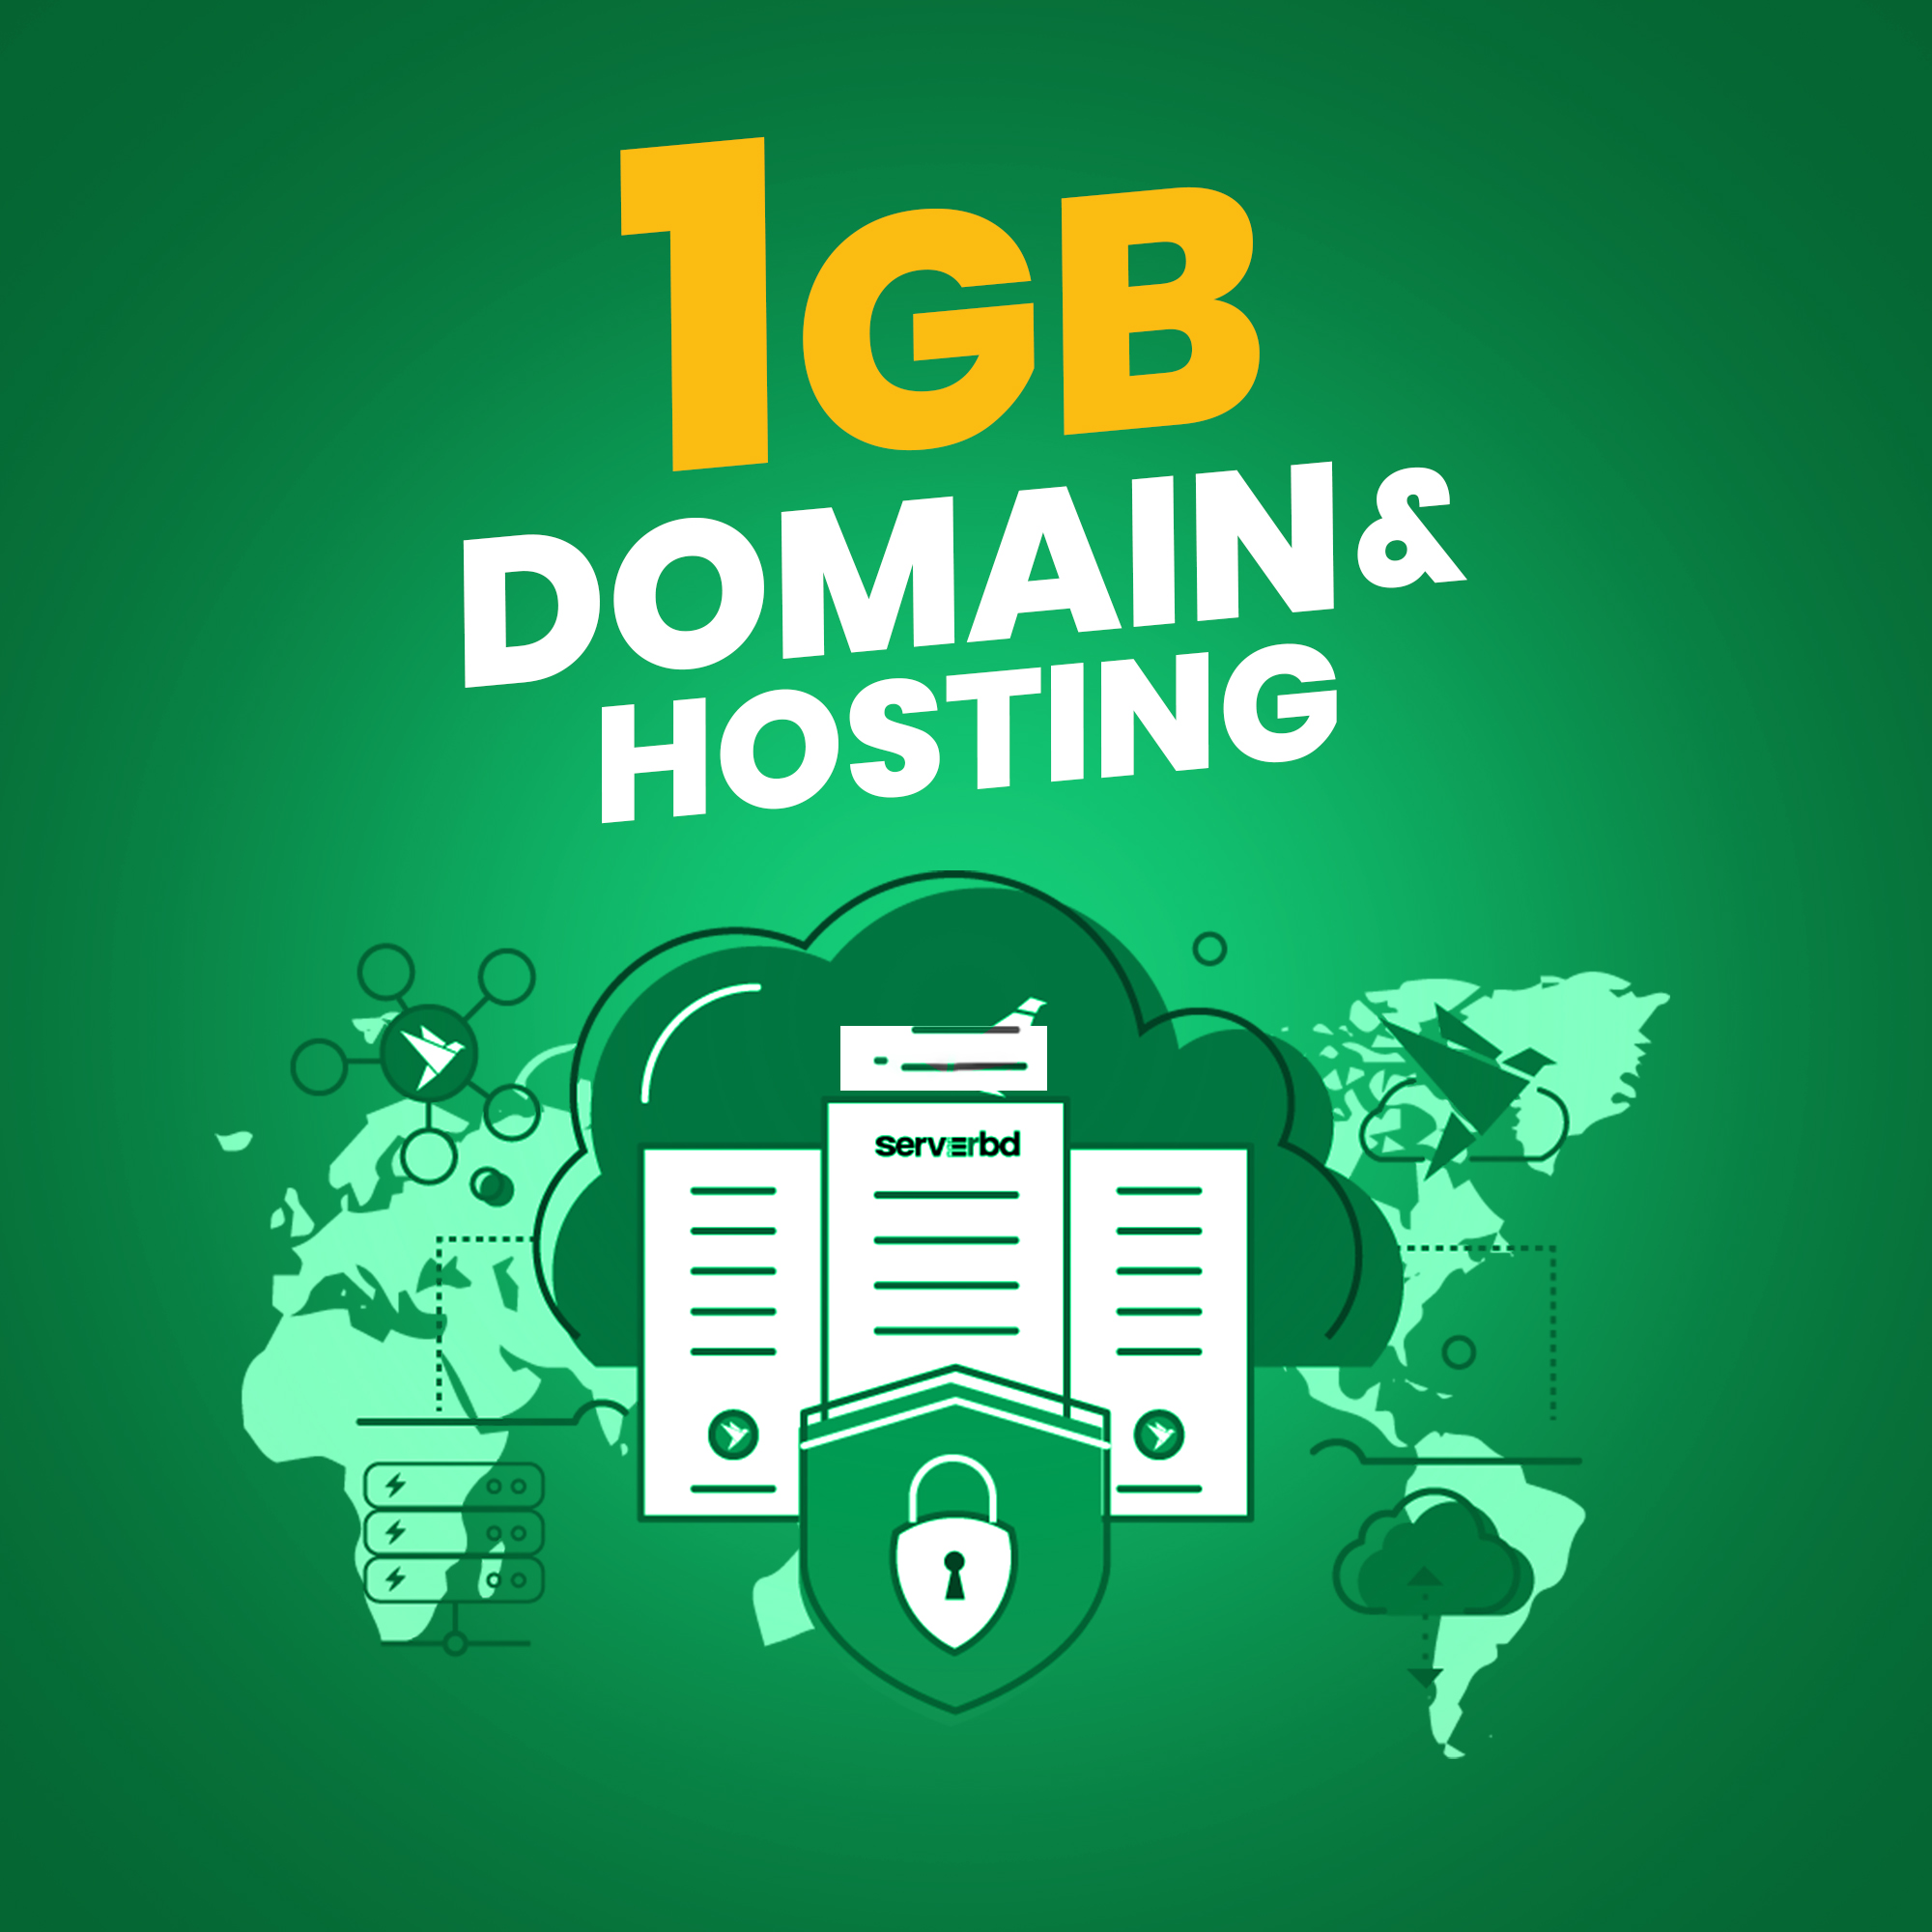 plexus cloud domain hosting